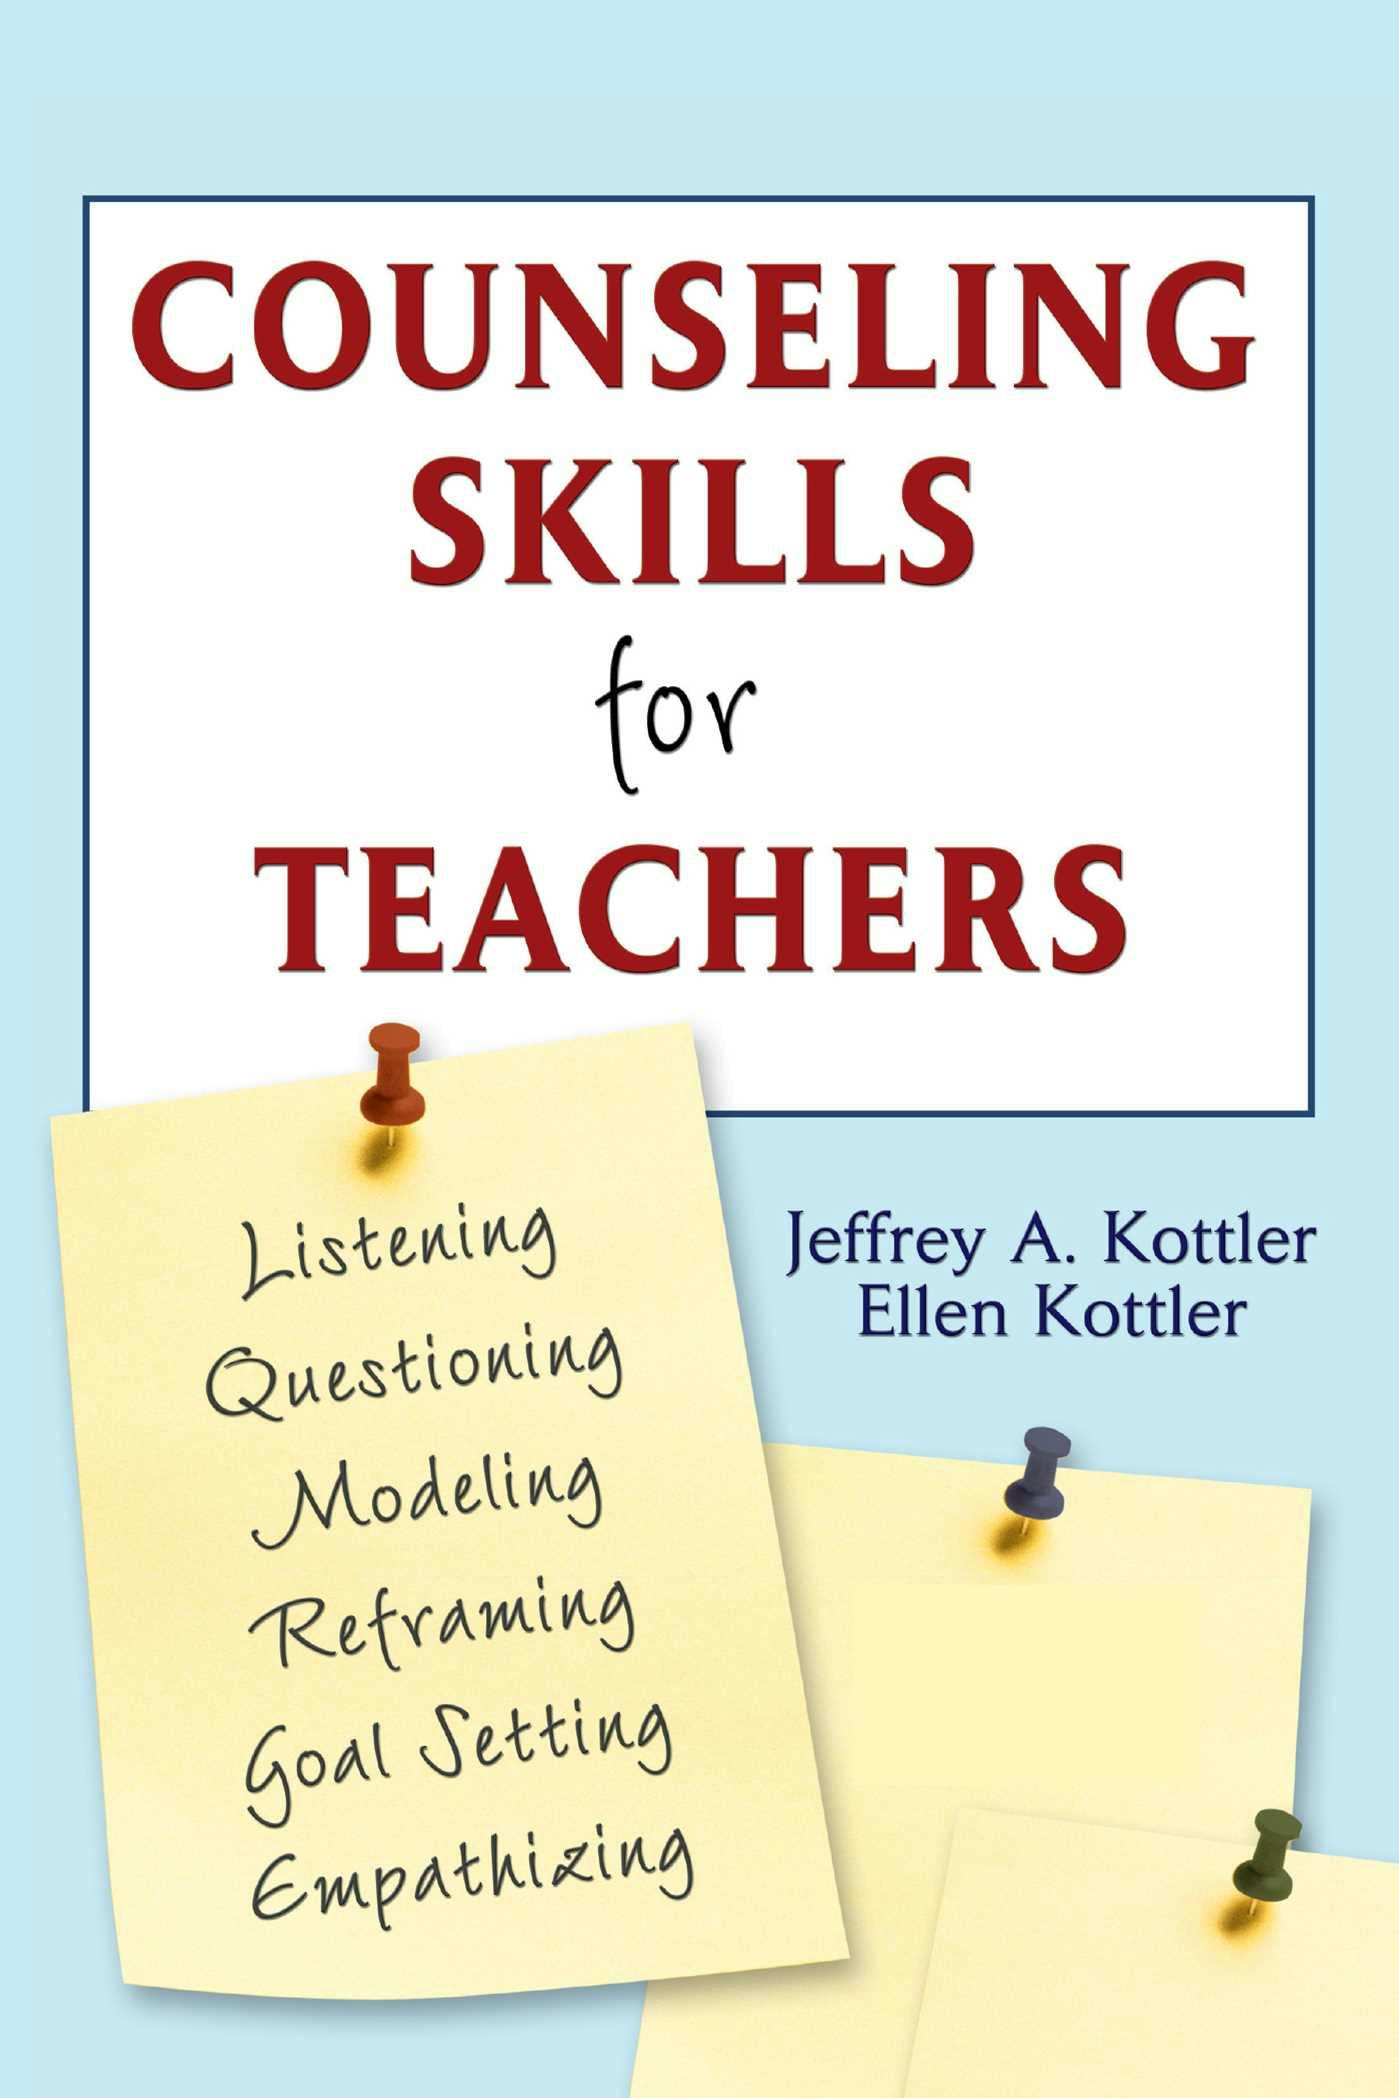 Counseling Skills for Teachers - Ellen Kottler, Jeffrey A. Kottler